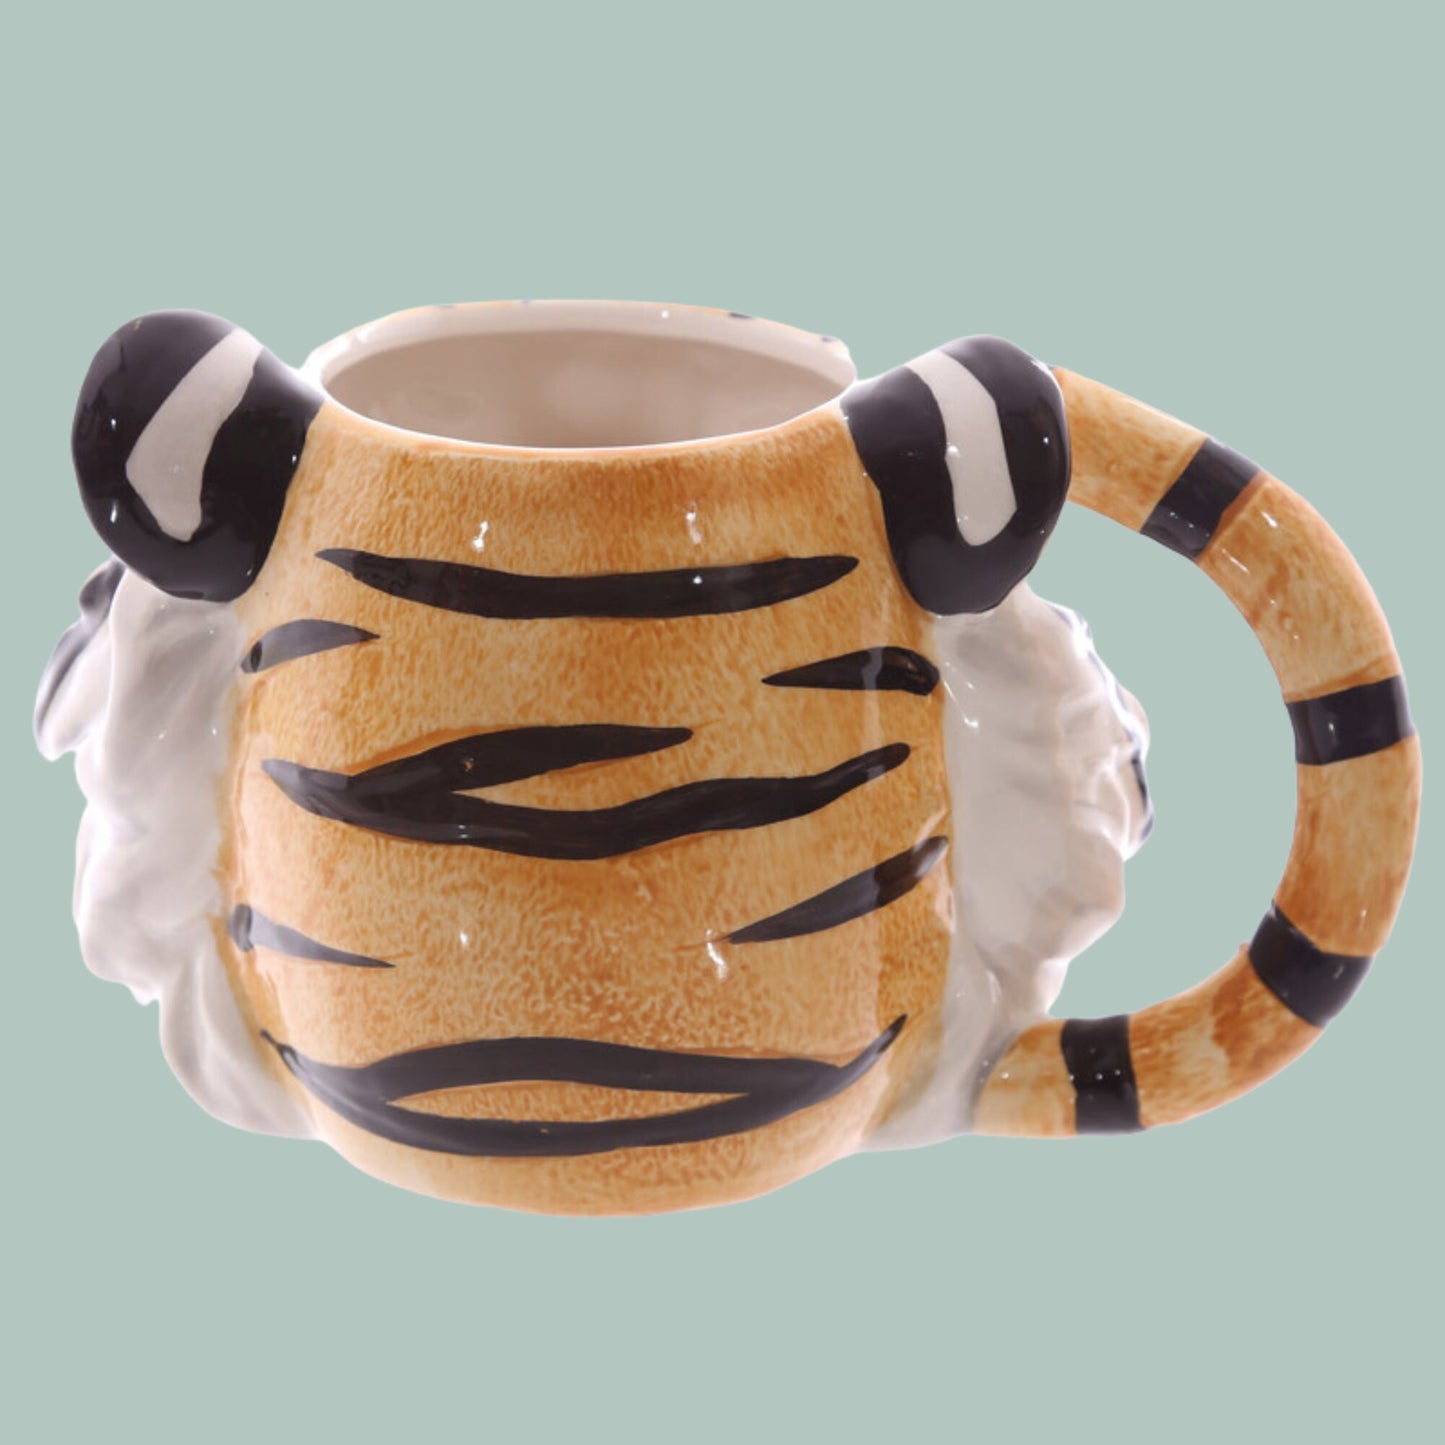 Novelty Tiger Head Shaped Mug